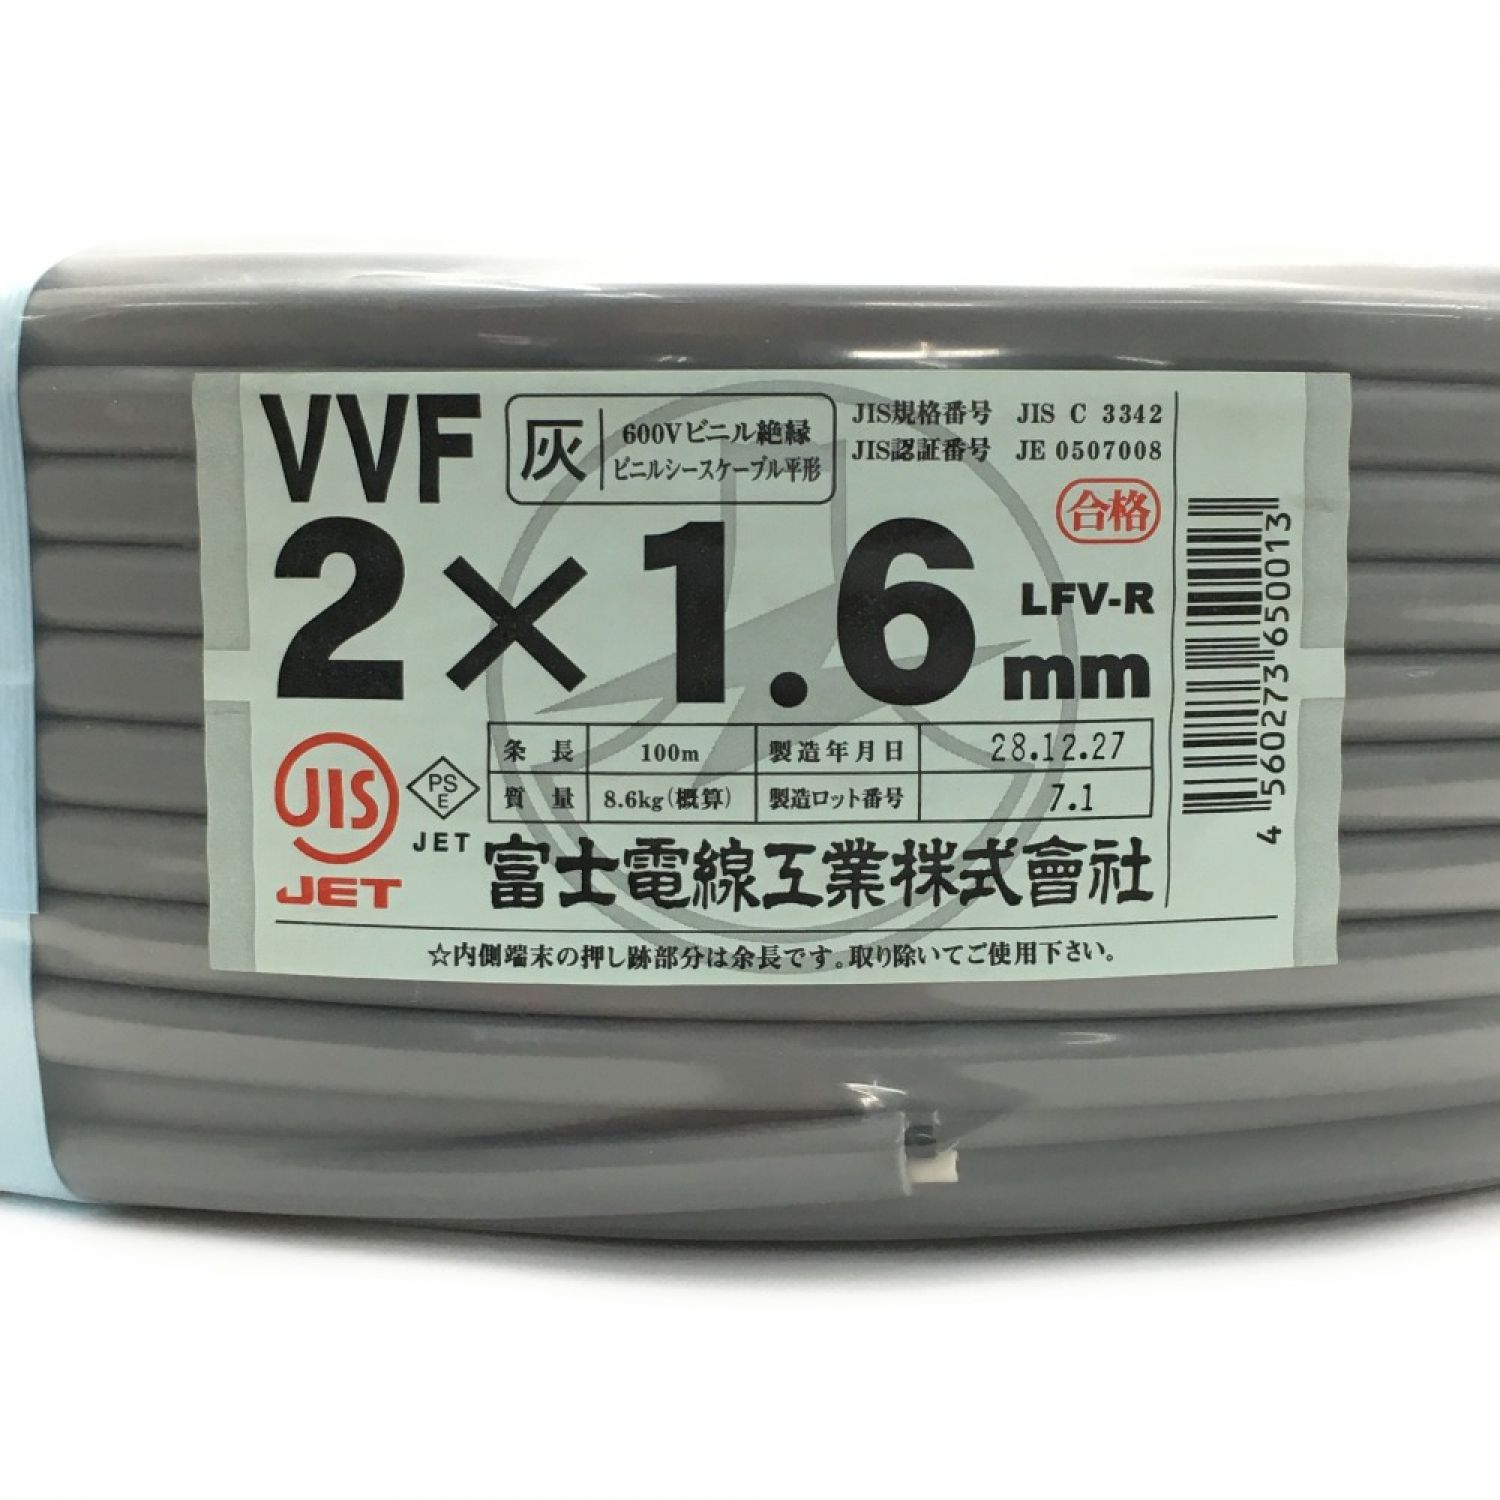 VVFケーブル1.6×2C VVF1.6-2C 100m - 4